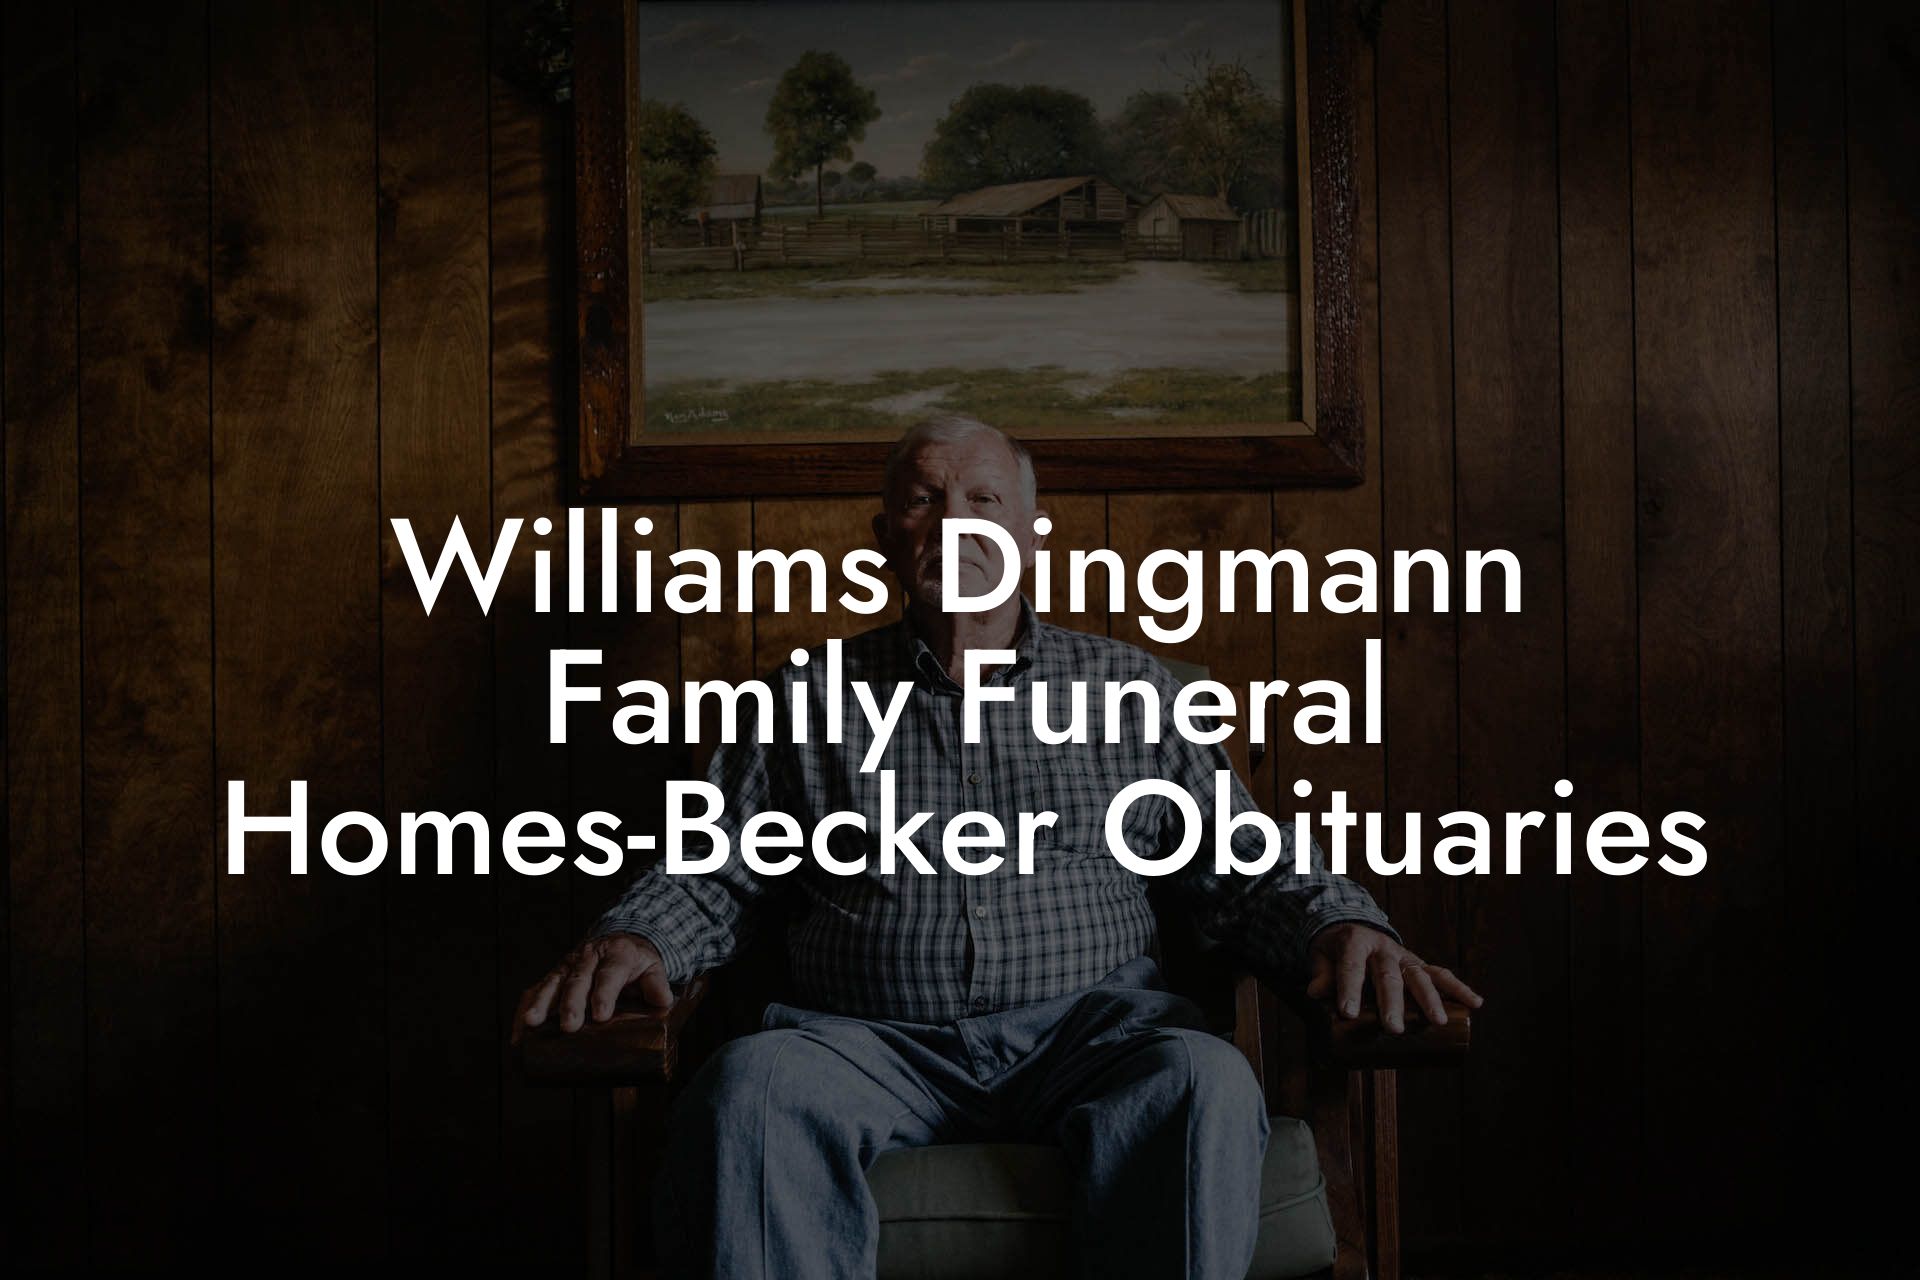 Williams Dingmann Family Funeral Homes-Becker Obituaries